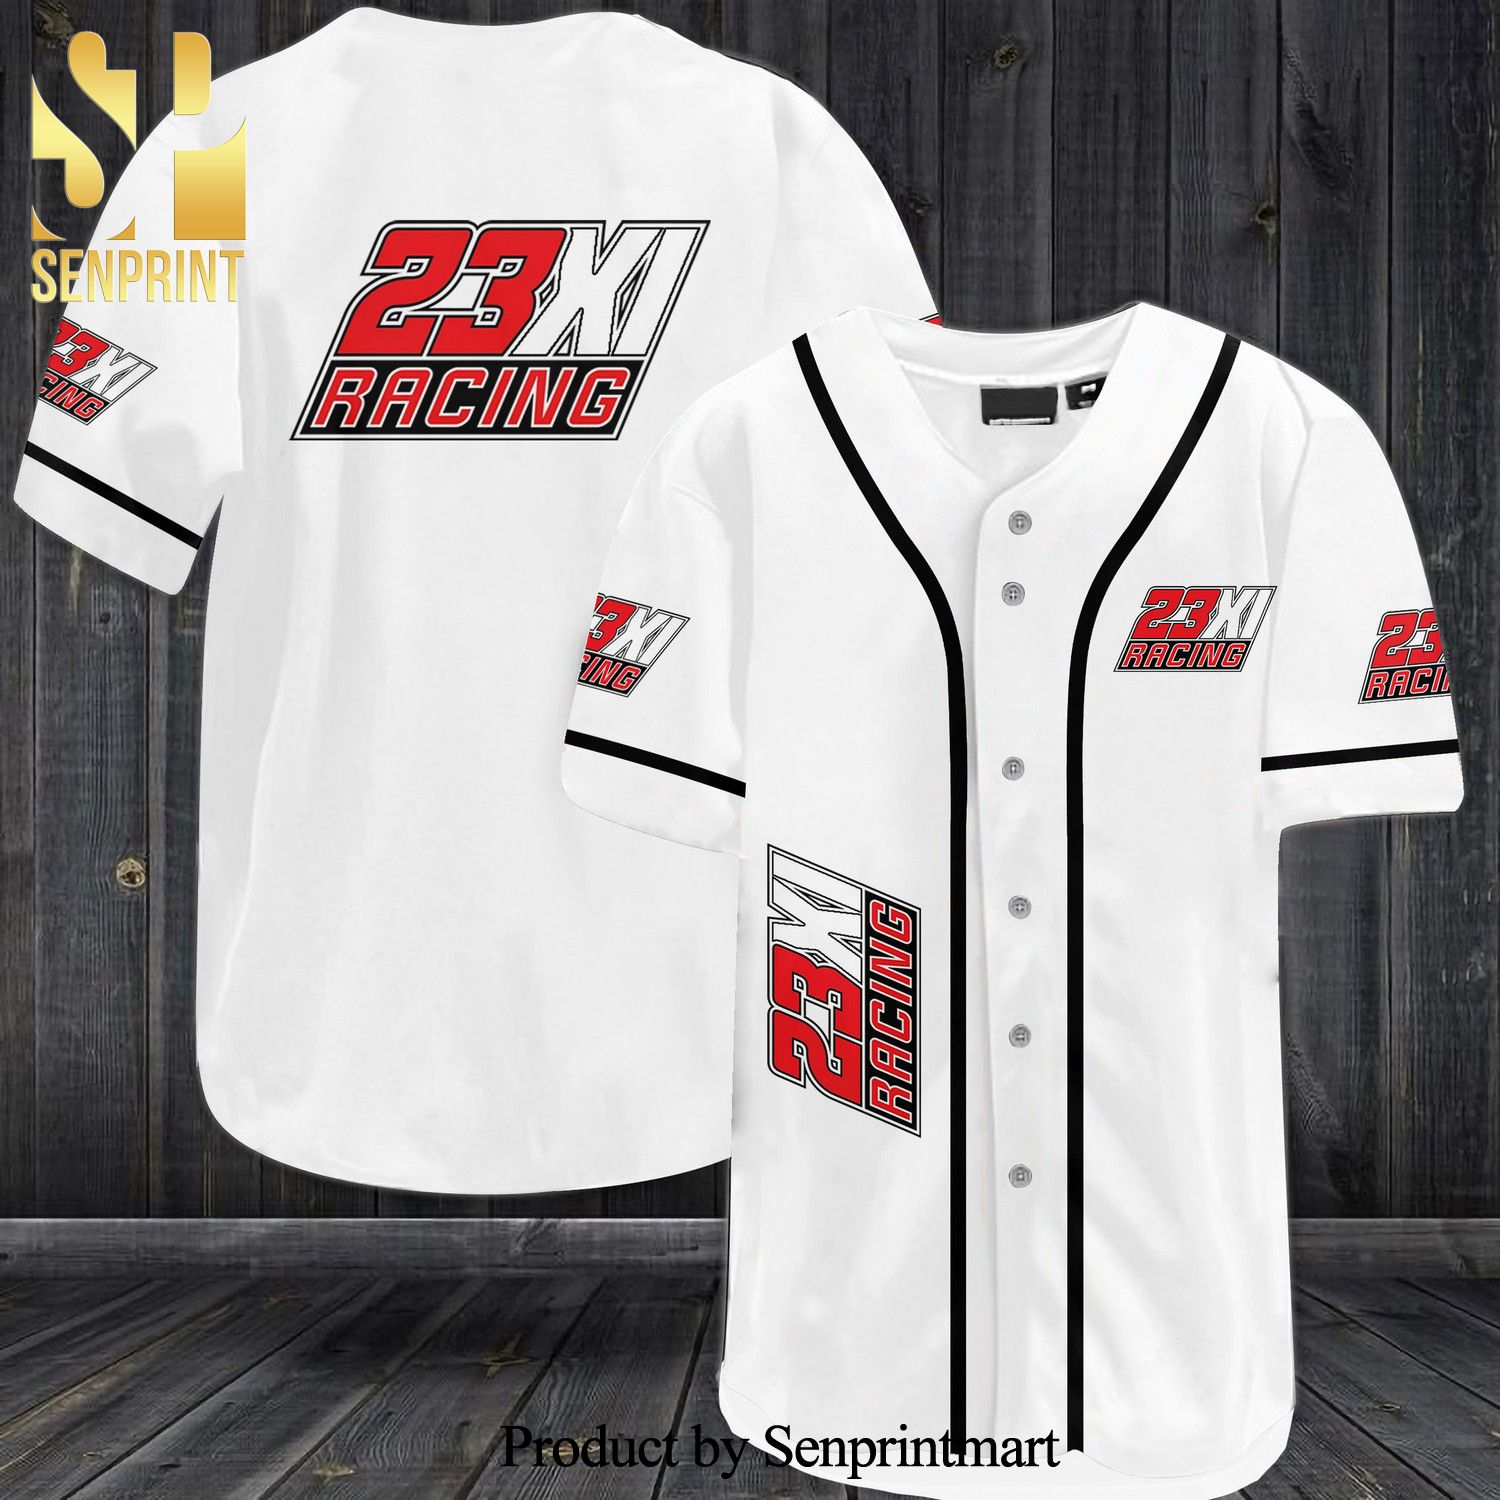 23XI Racing Car Team All Over Print Baseball Jersey – White